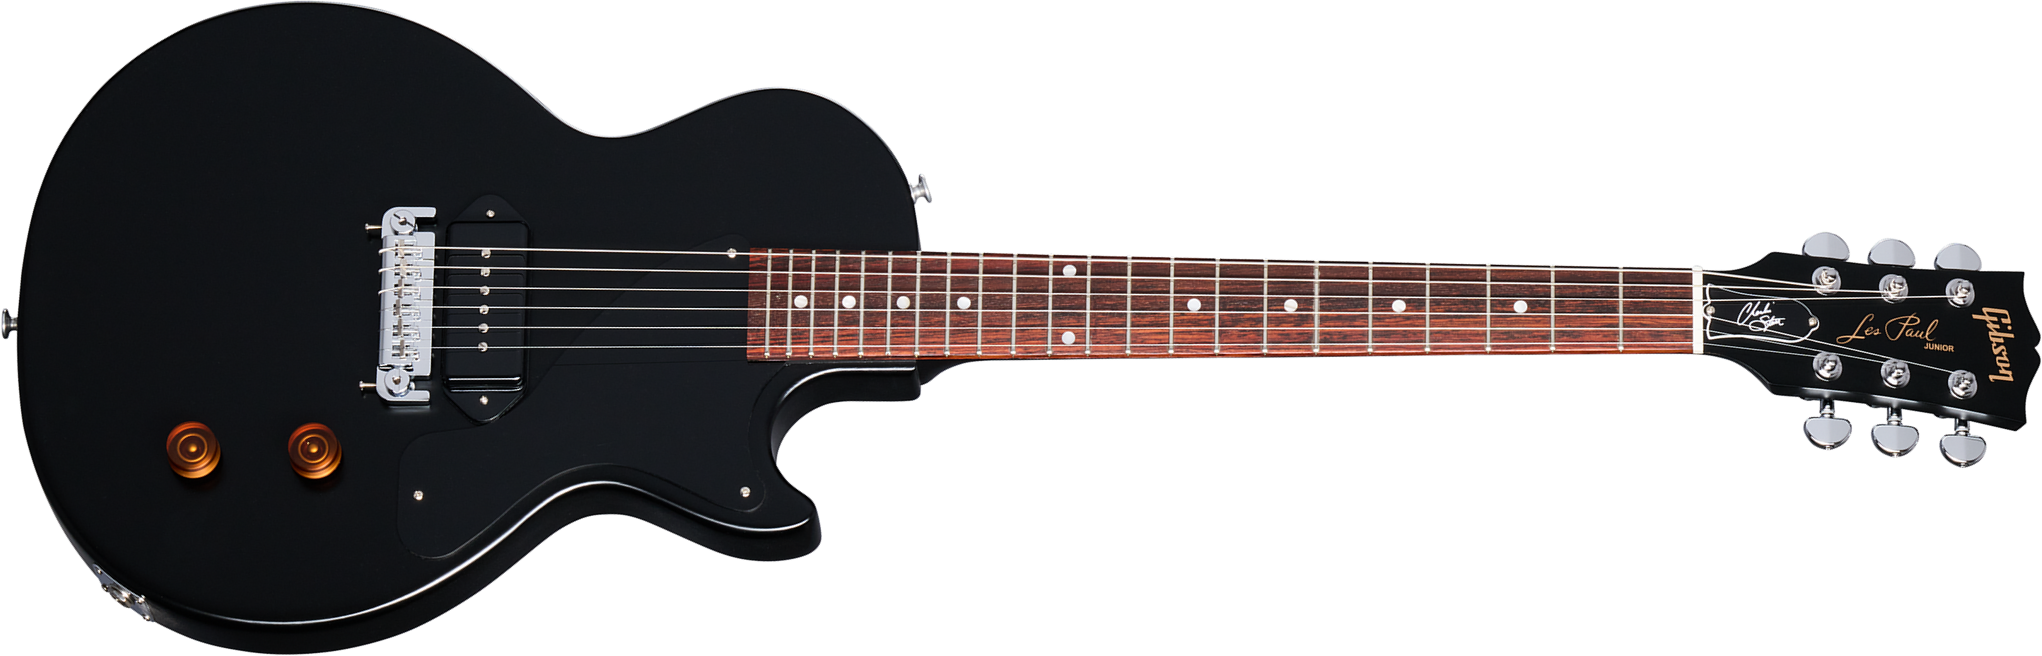 Gibson Charlie Starr Les Paul Junior Ltd Signature 1p90 Ht Rw - Ebony Satin - Enkel gesneden elektrische gitaar - Main picture